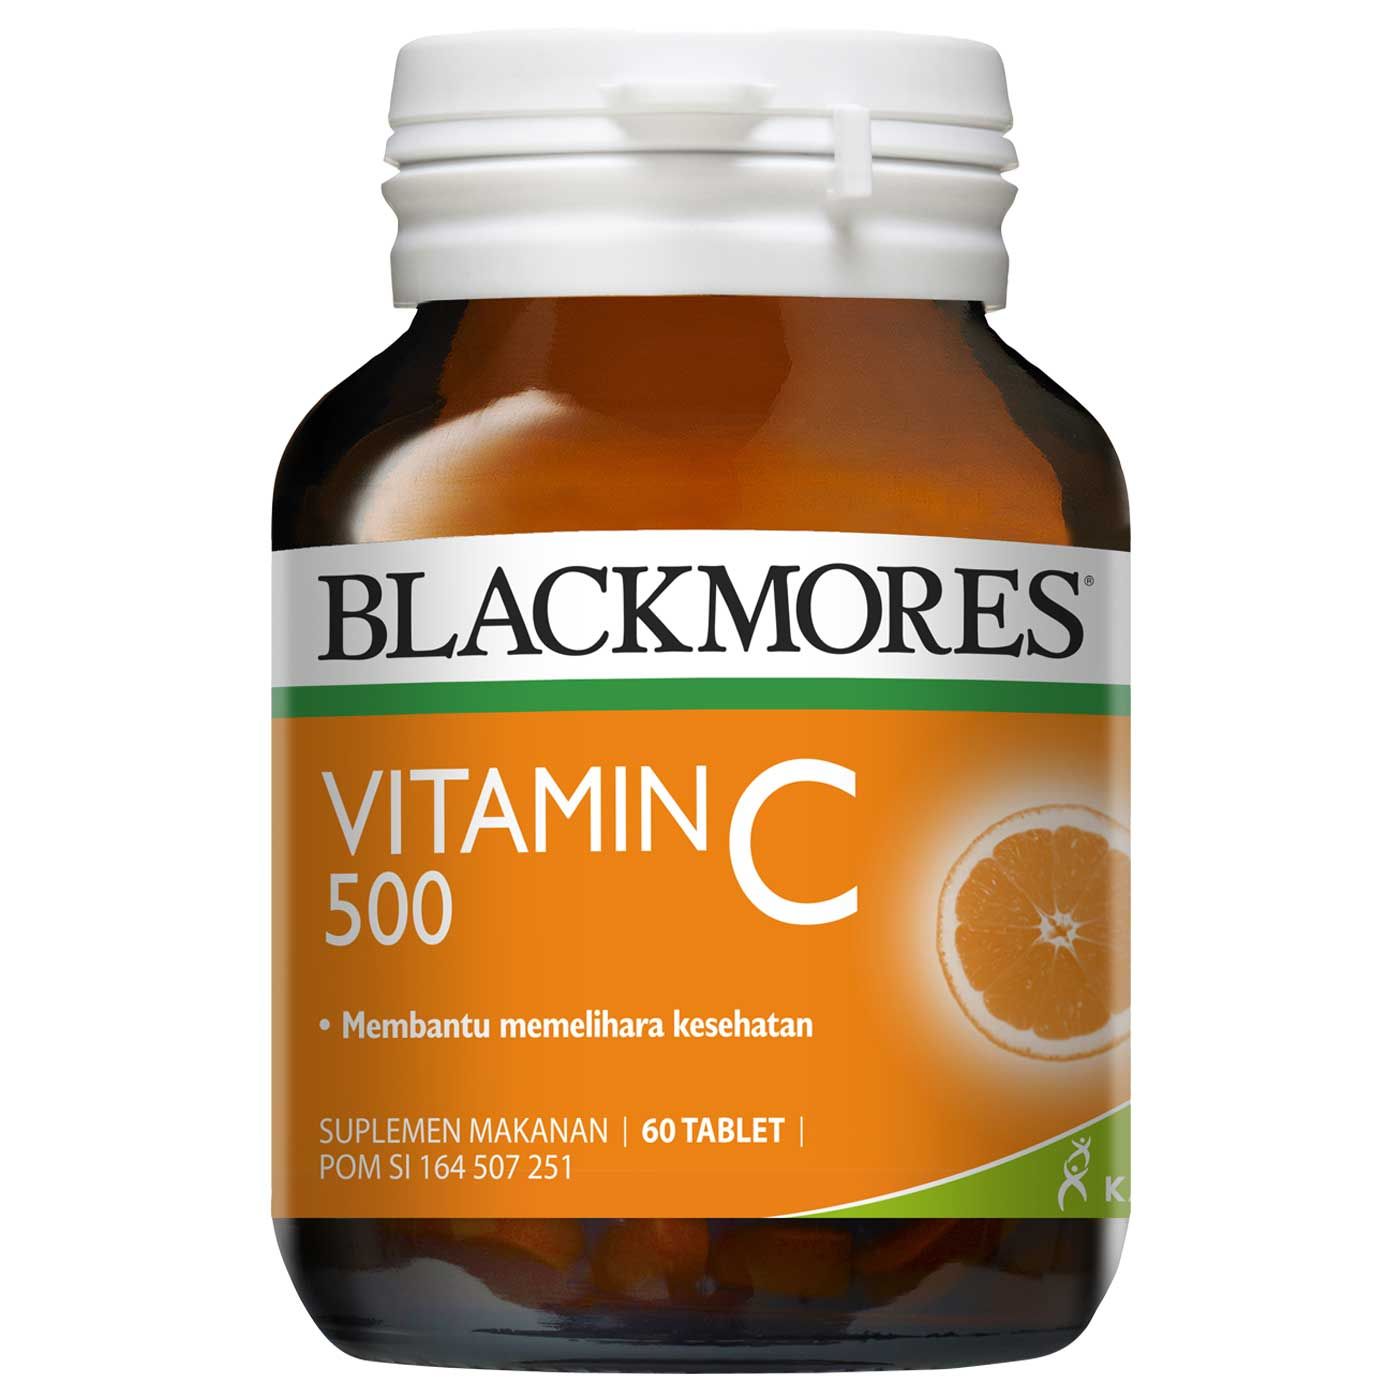 Blackmores Vitamin C 500mg 60 Tablets - 1